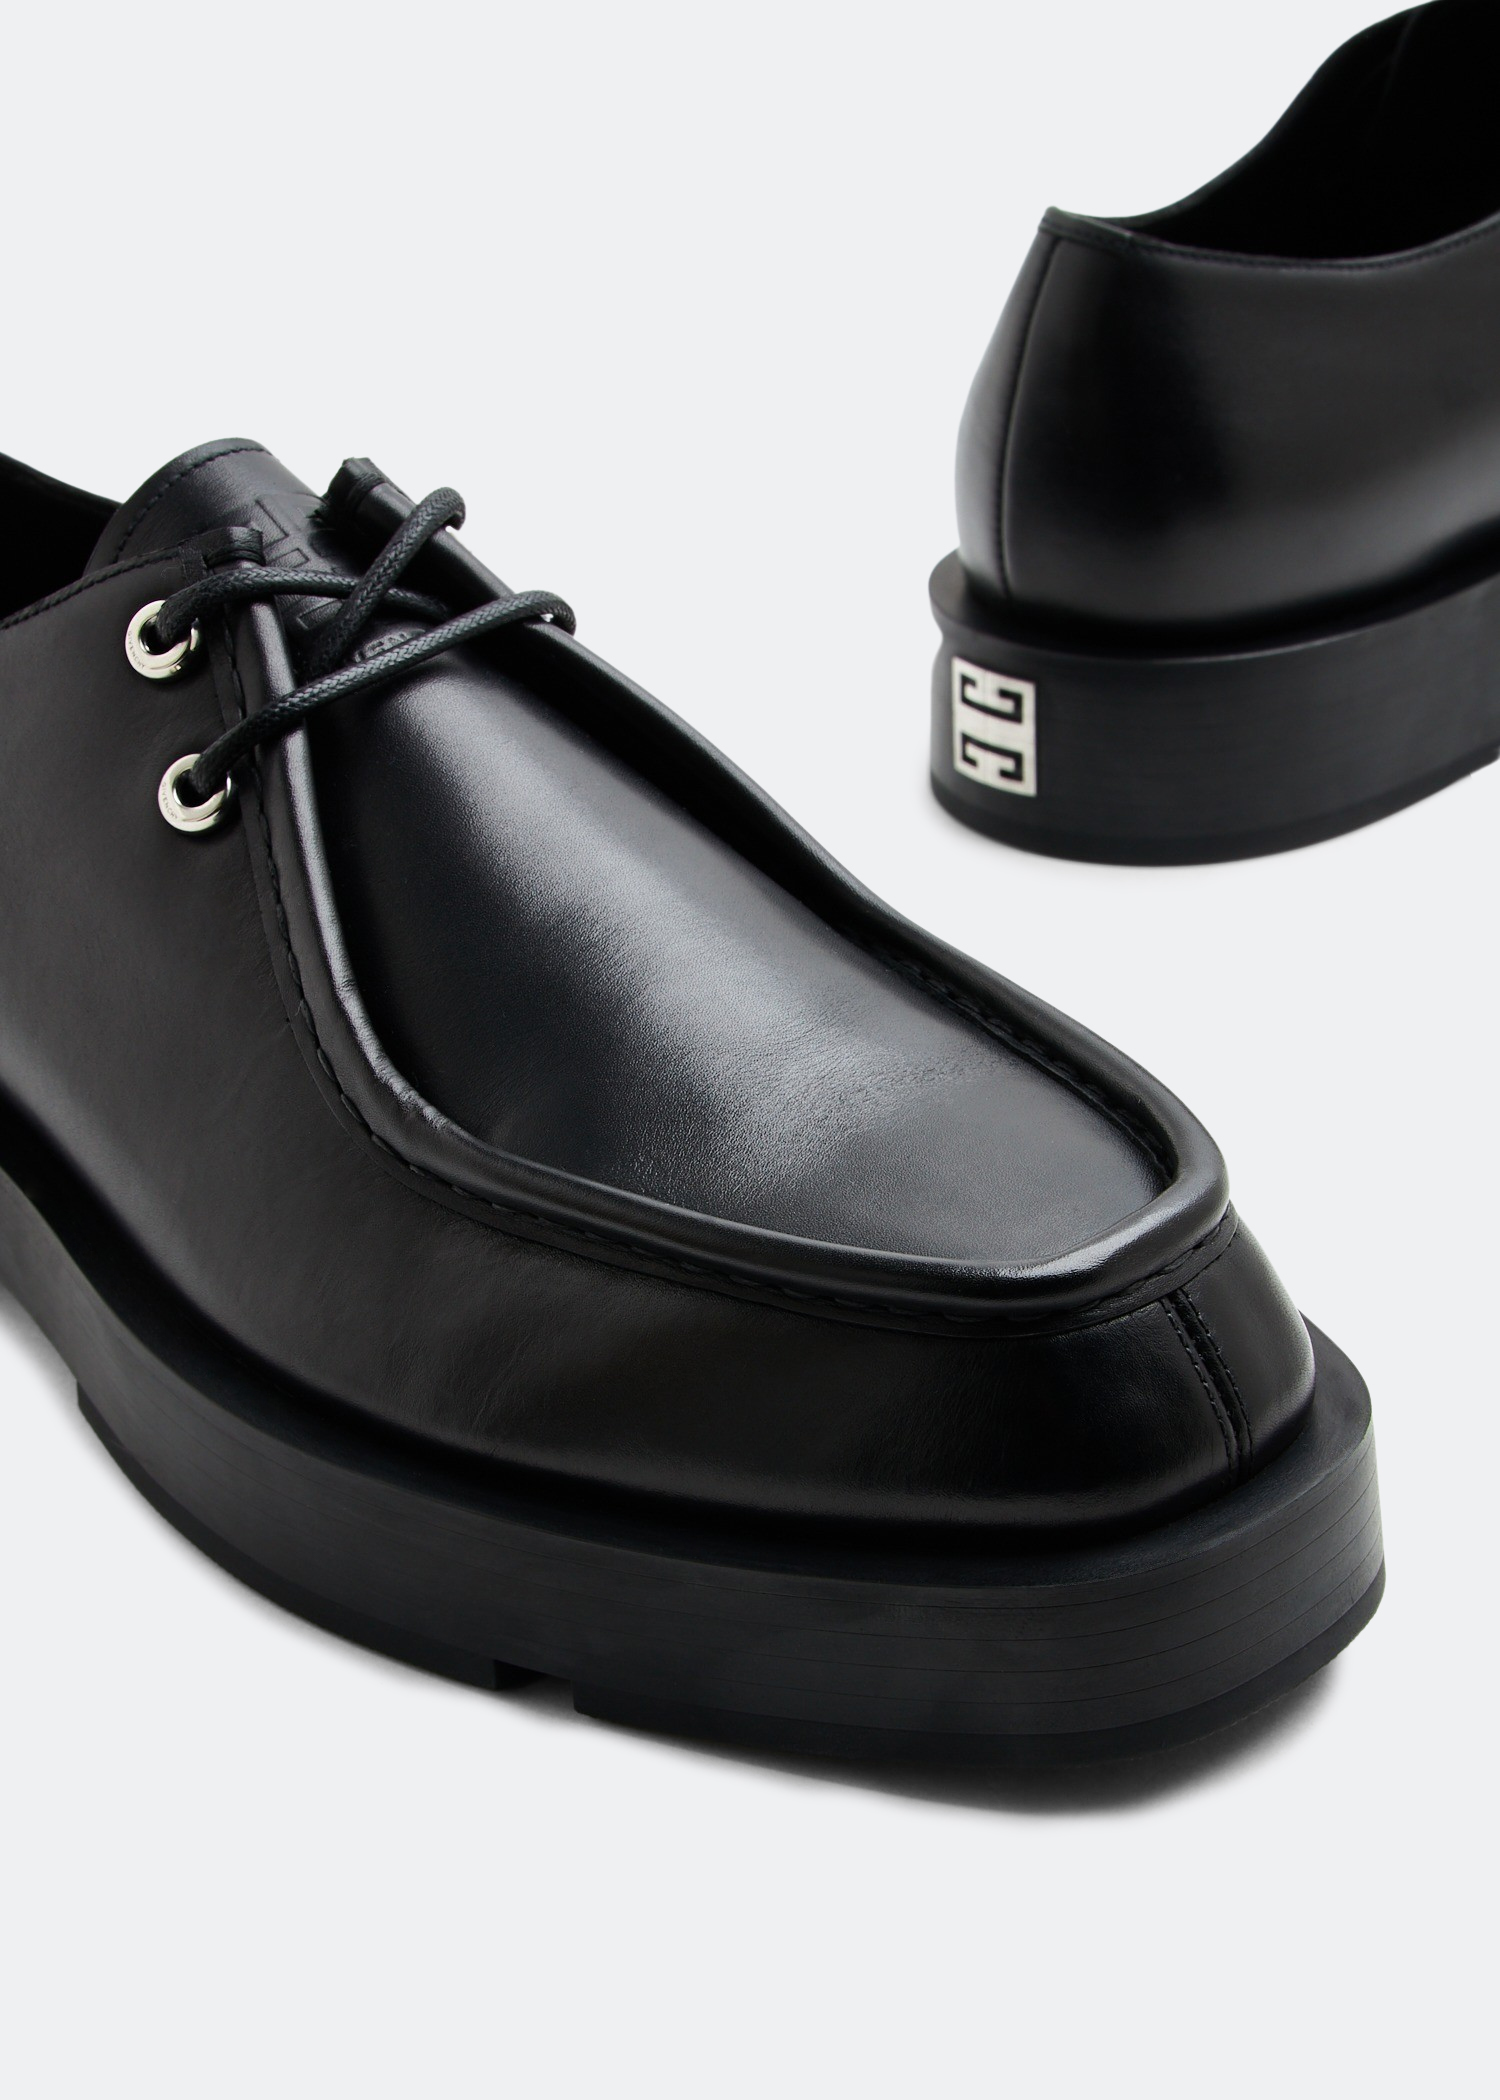 Givenchy Squared Derby shoes for Men - Black in KSA | Level Shoes